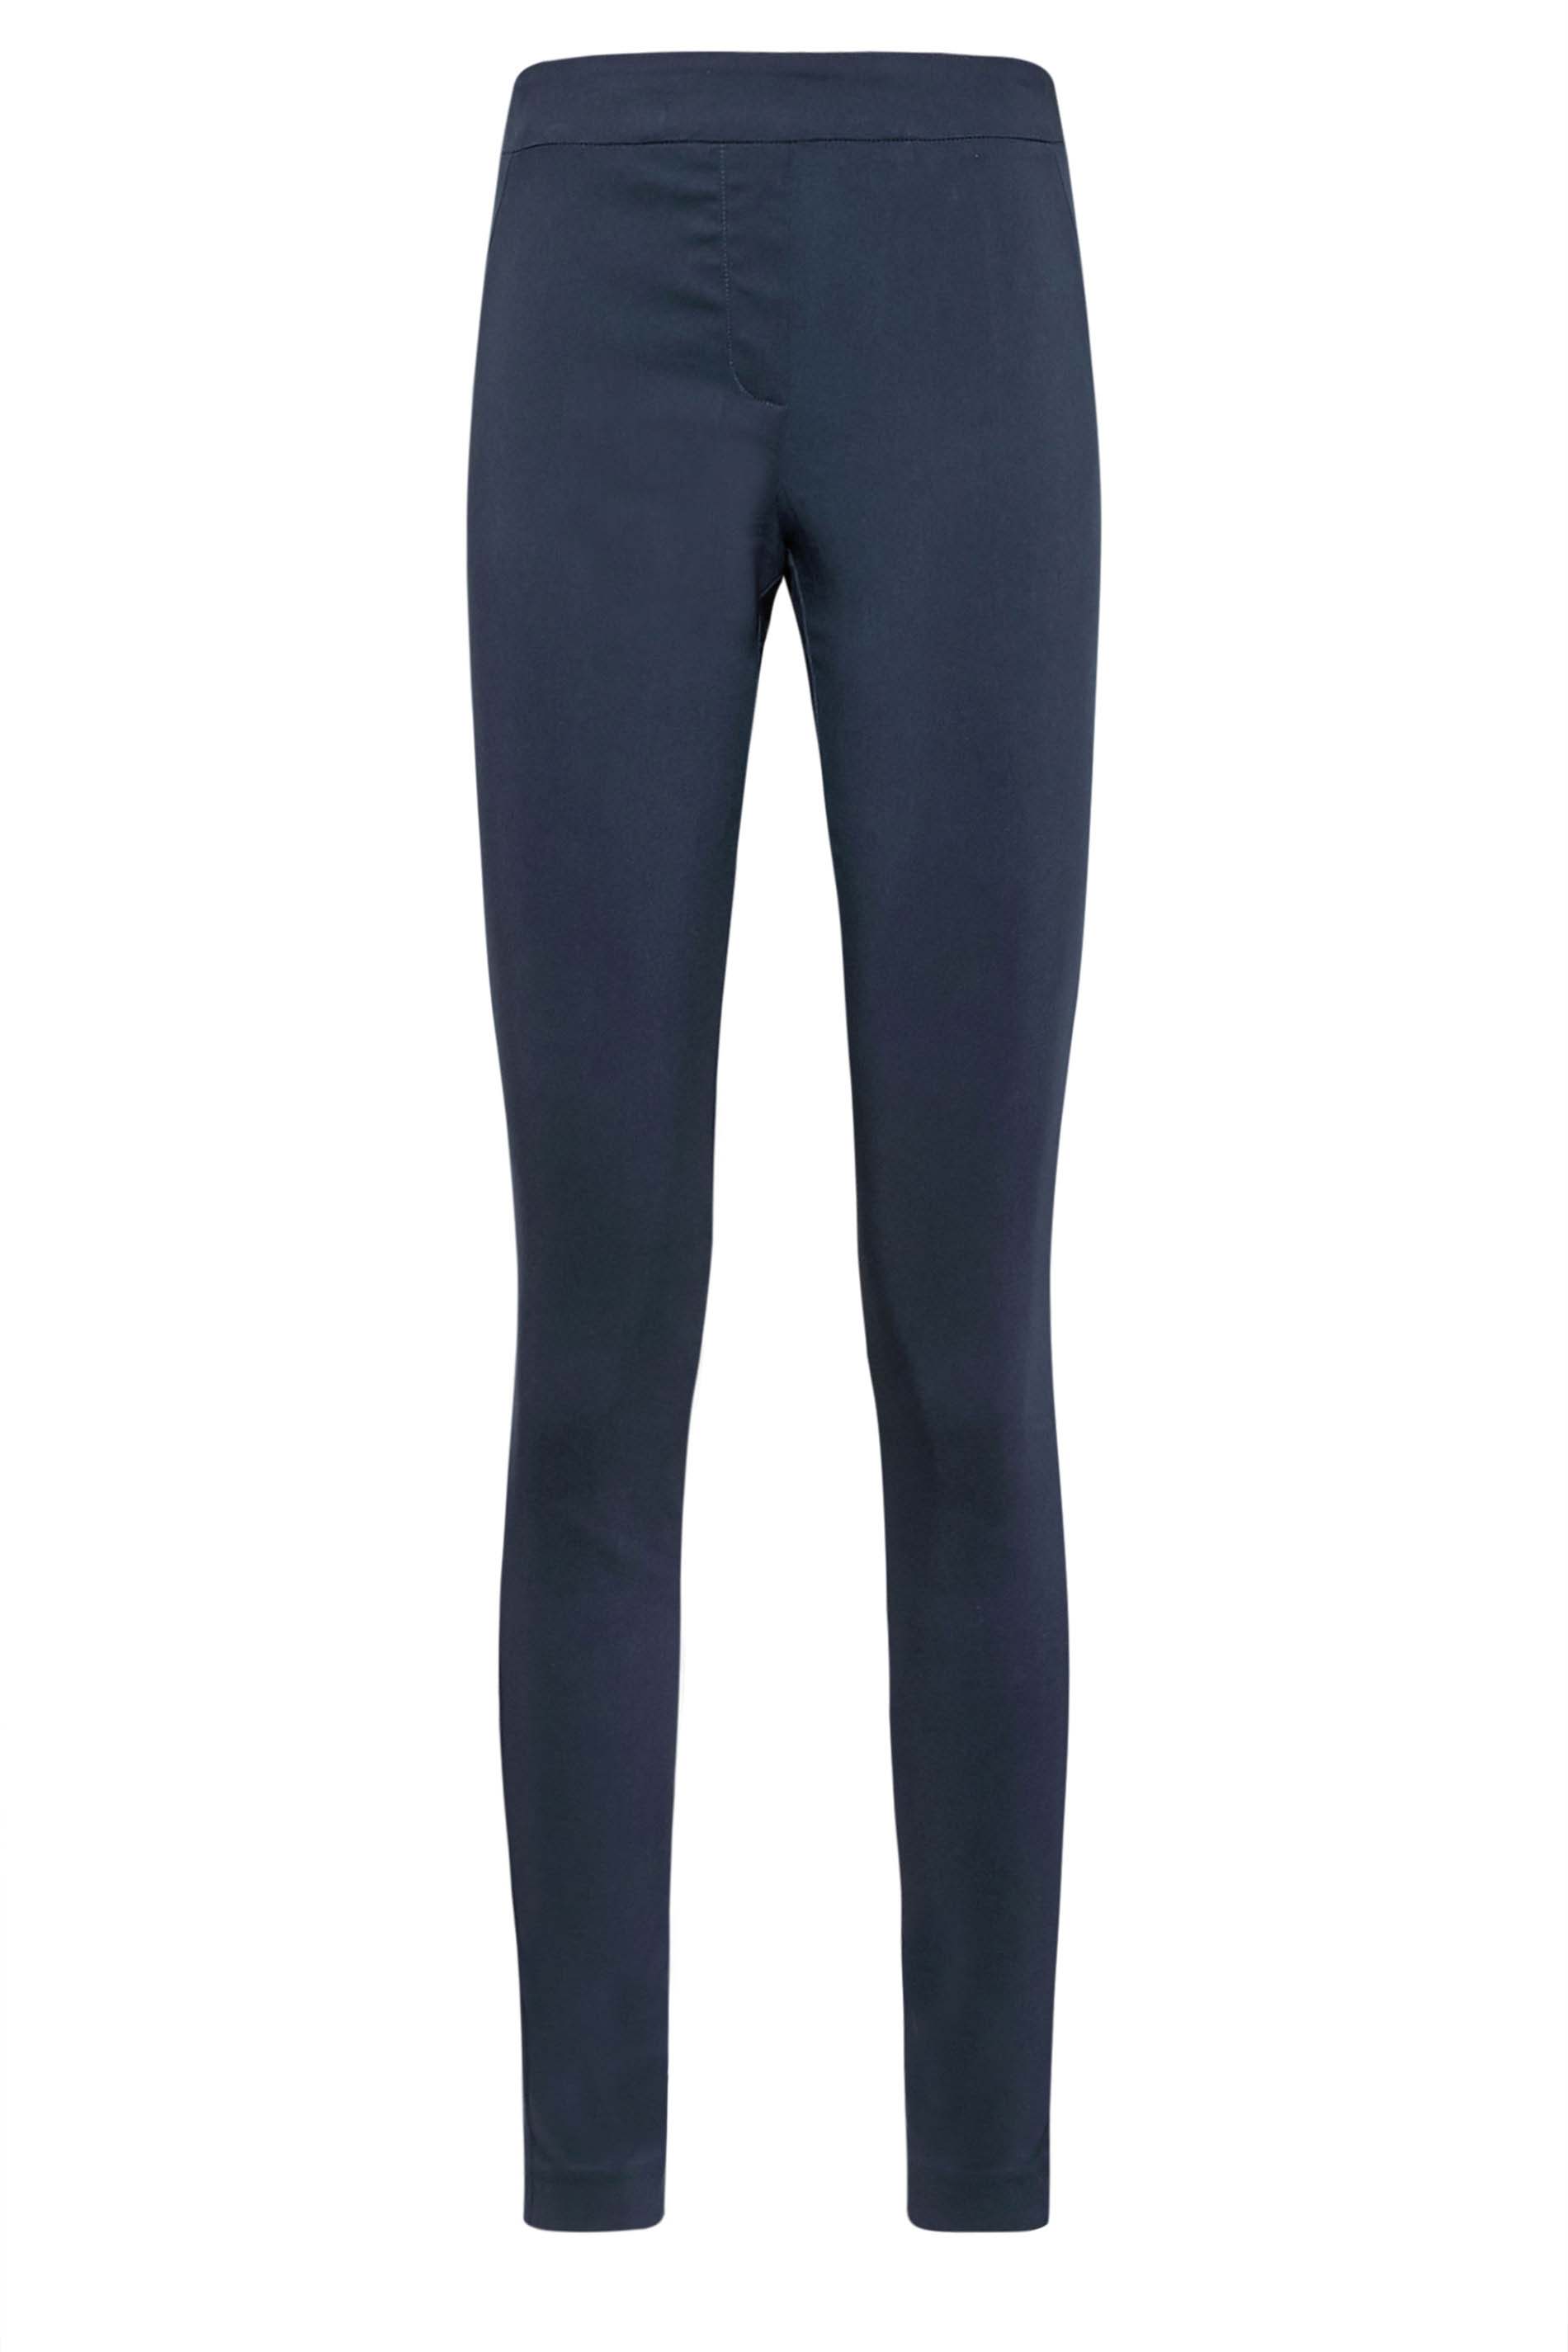 LTS Tall Women's Navy Blue Stretch Skinny Leg Trousers | Long Tall Sally